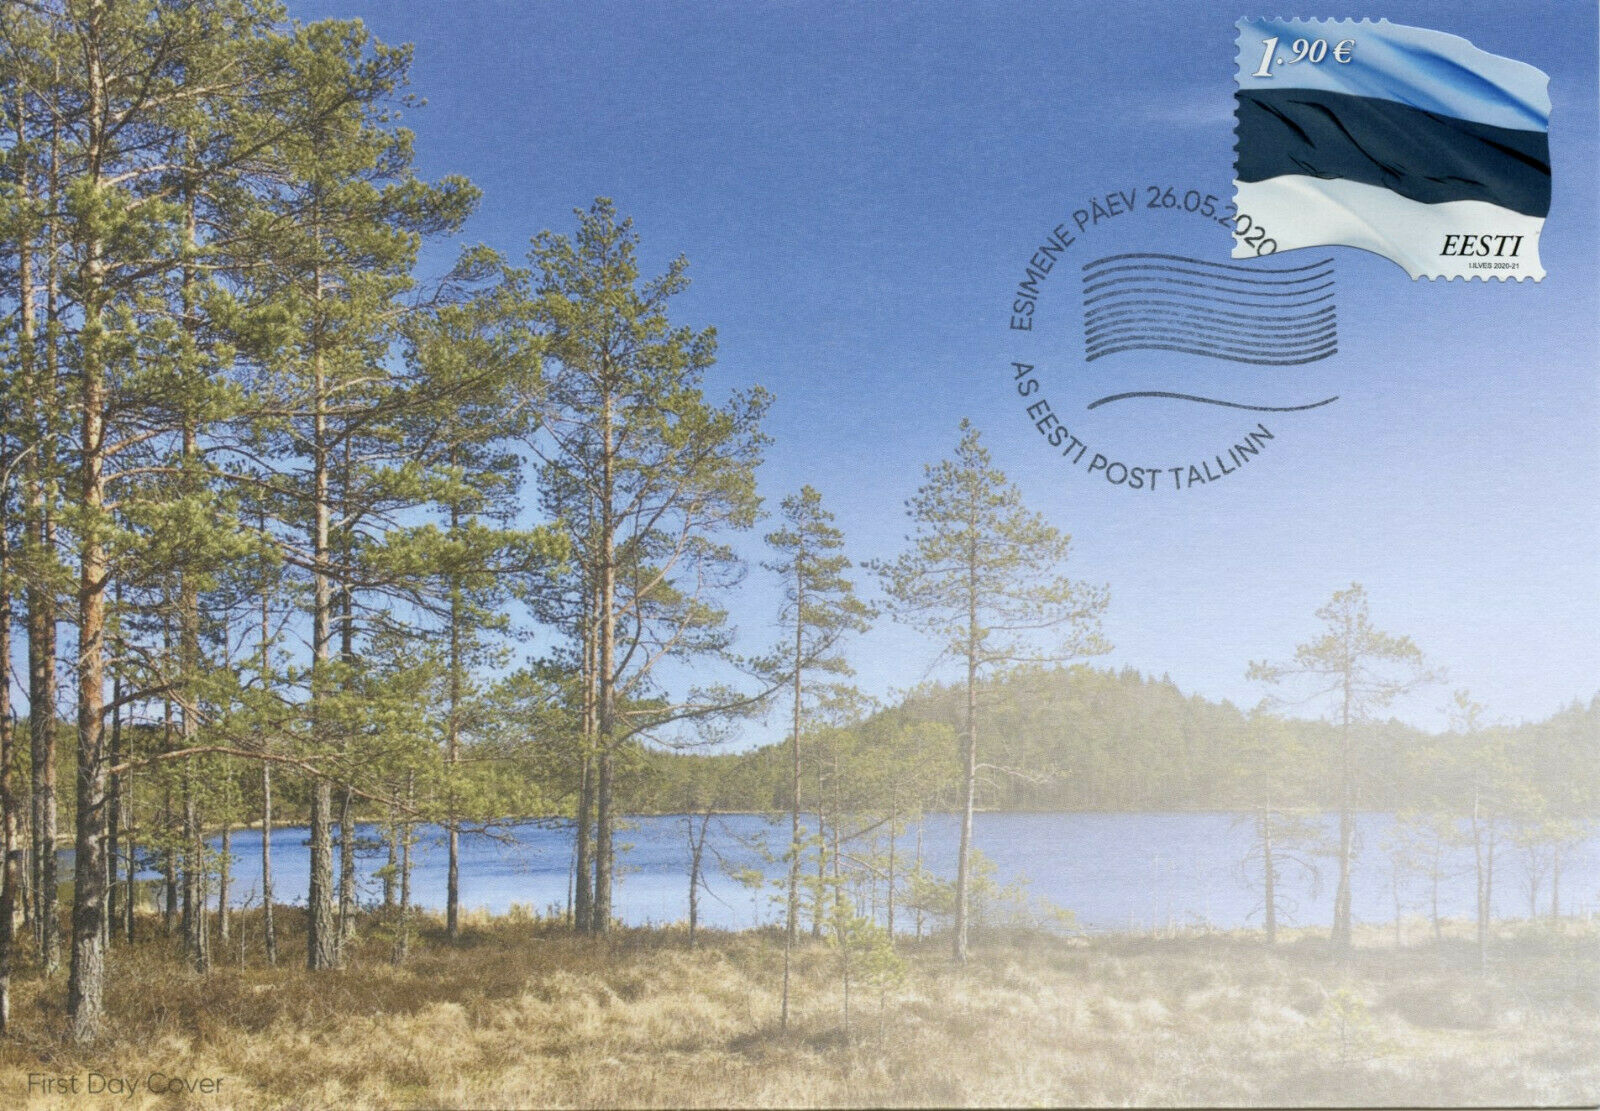 Estonia Flags Stamps 2020 FDC Estonian Flag E1.90 National Emblems 1v S/A Set